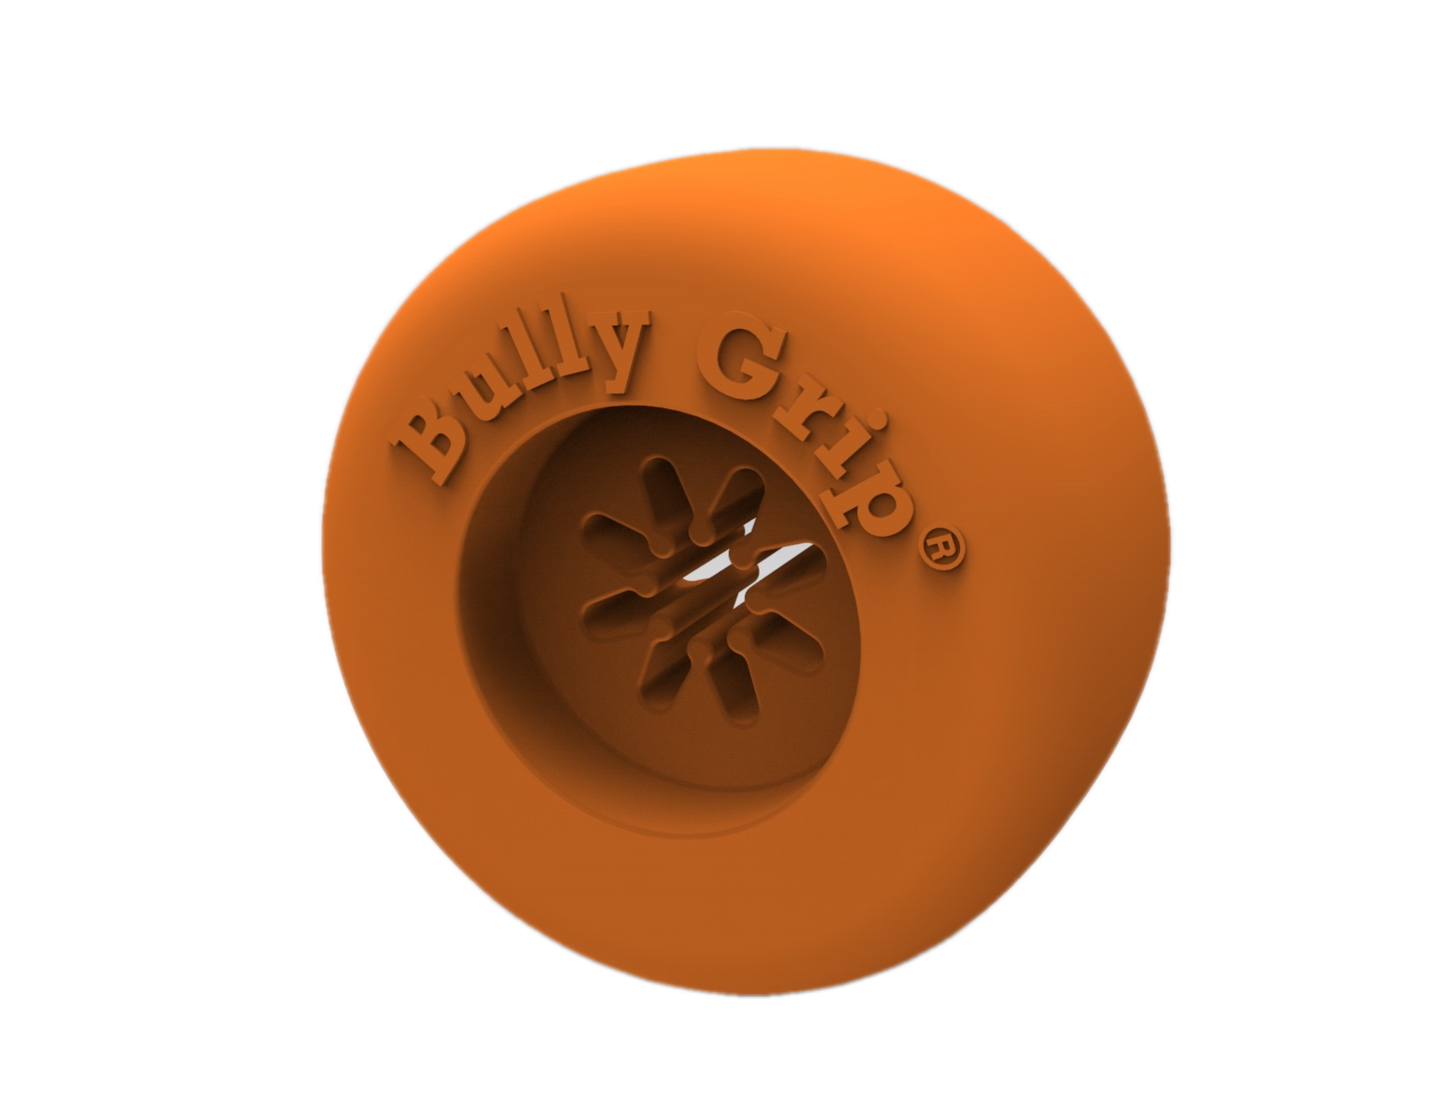 Bully Grip - Bully stick & dental chew holder